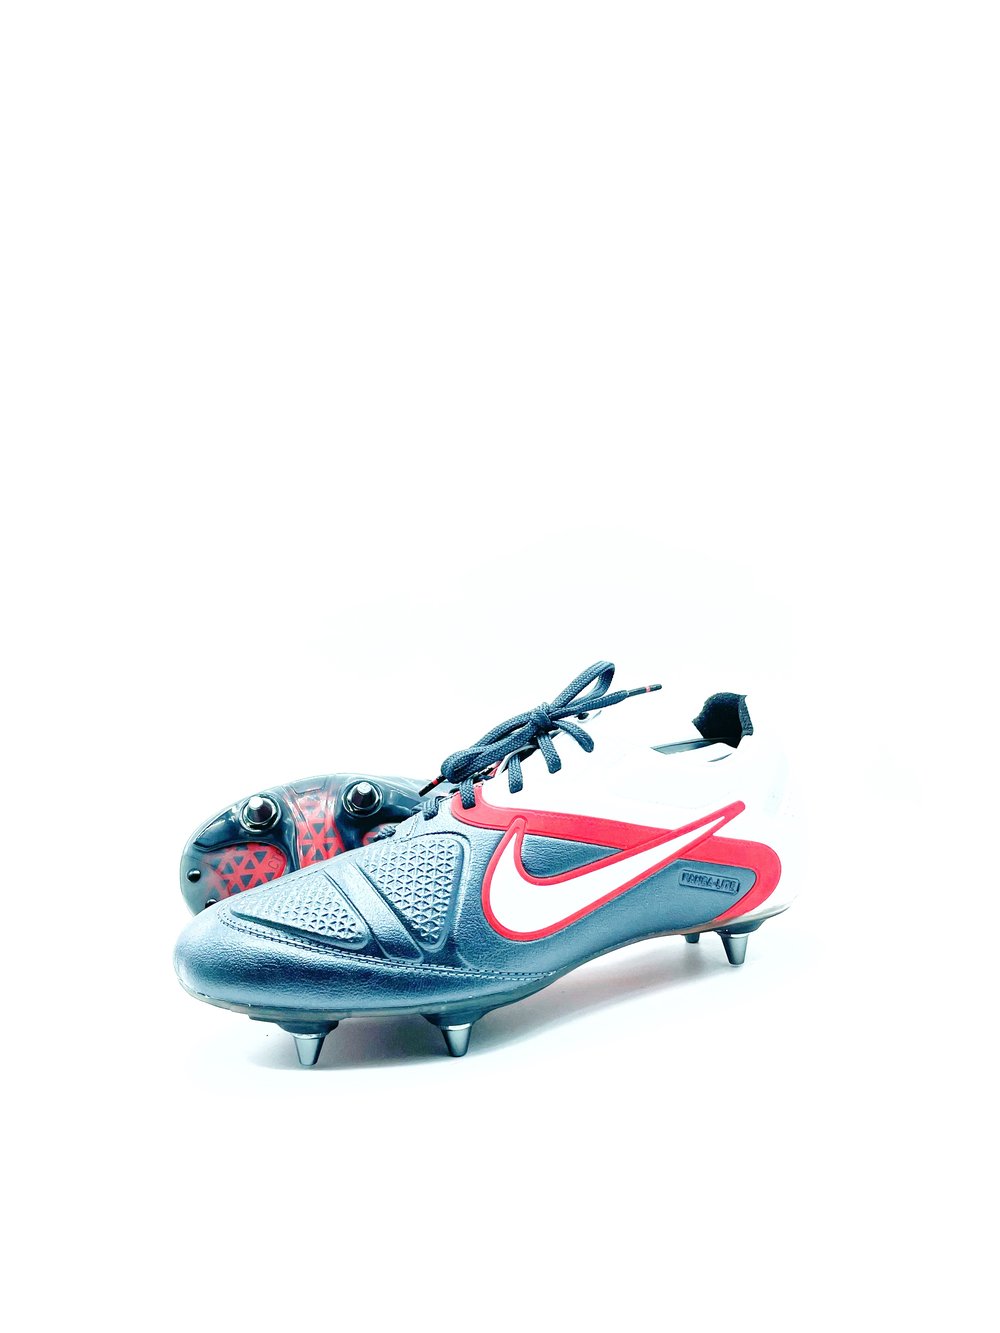 Image of Nike CTR360 maestri Sg black red 